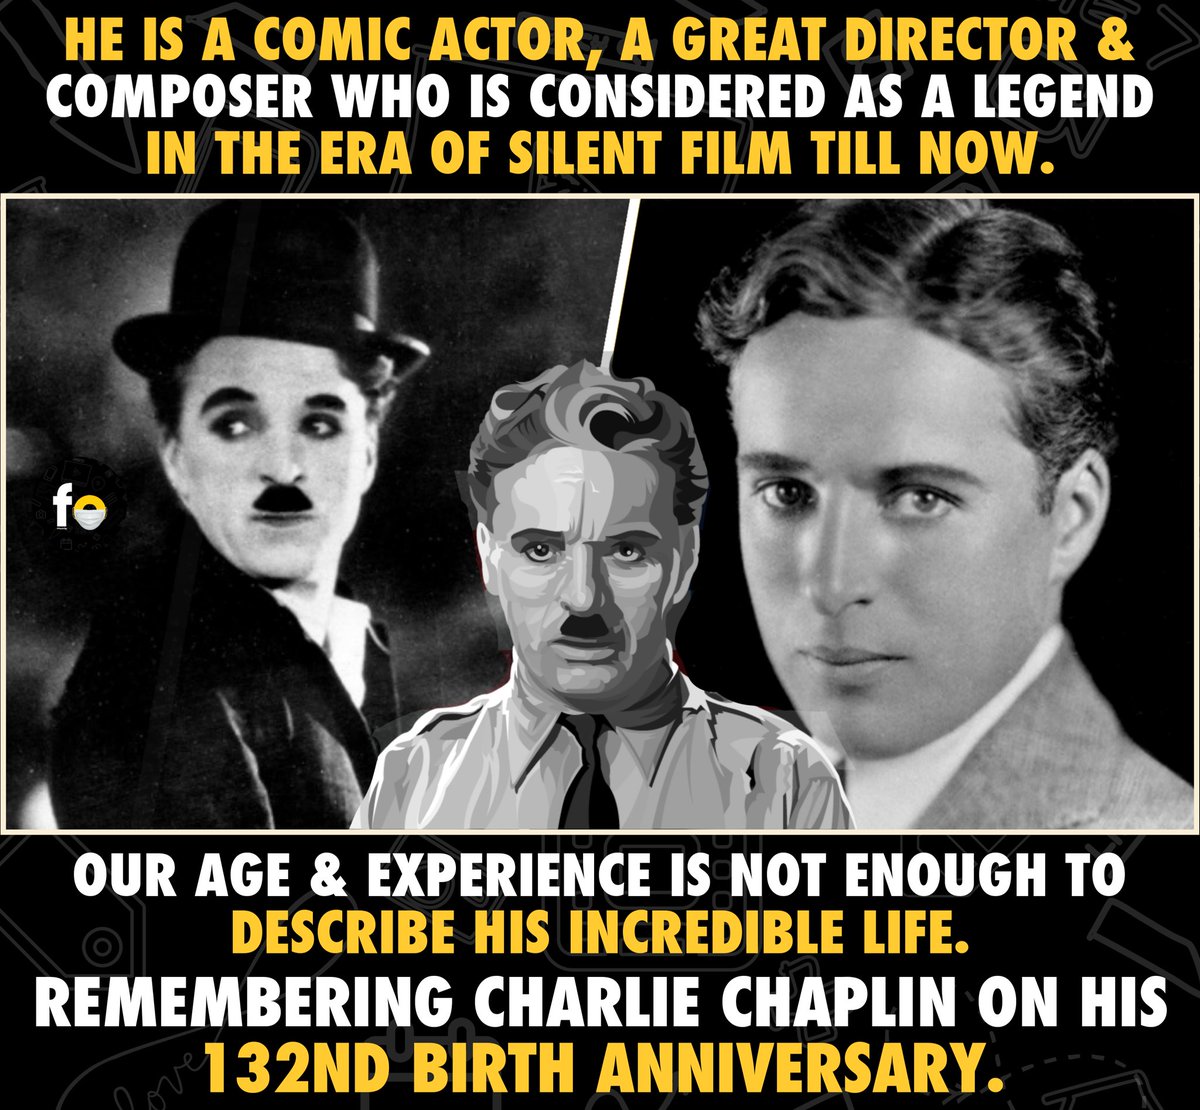 He Is Just A LEGEND...
#HBDCharlieChaplin

#CharlieChaplinBirthAnniversary #RememberingCharlieChaplin
#HappyBirthday #BornToday
#Entertainment
#ChaplinChaplin #MaskUp #FilmOrama